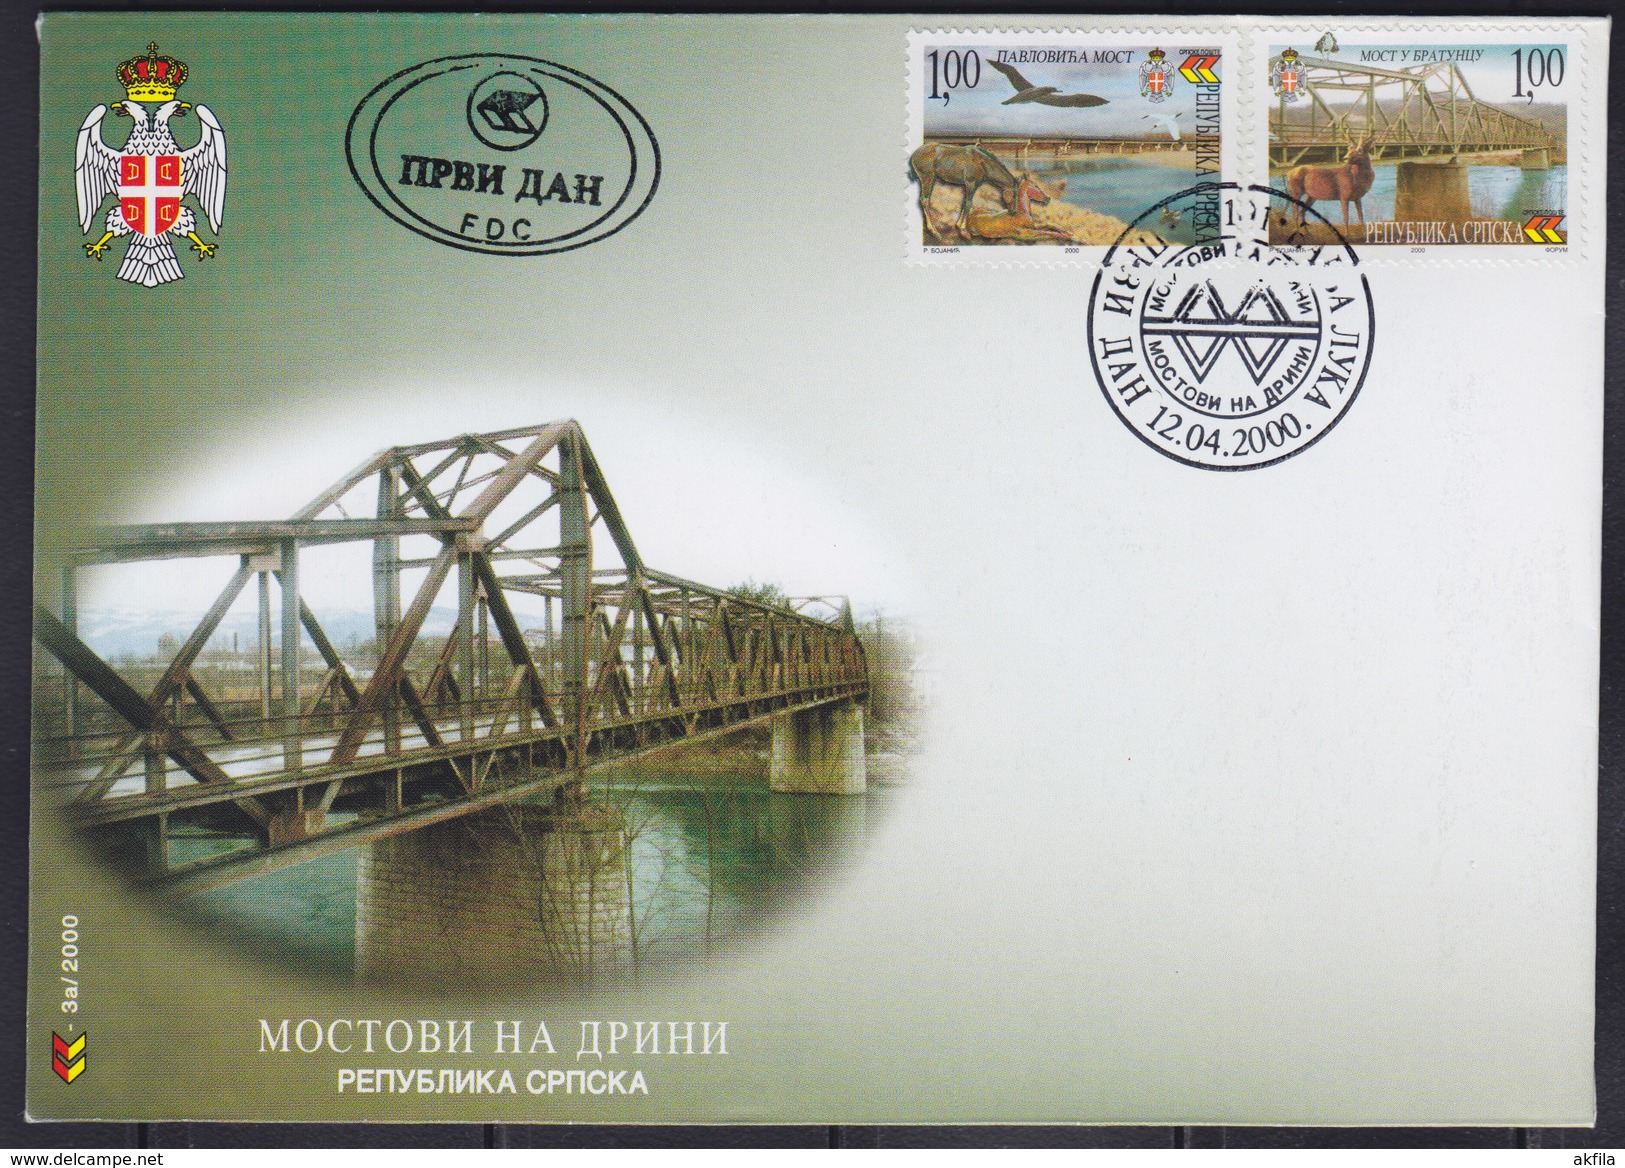 Bosnia - Republic Of Srpska 2000 Bridges On Drina River, FDC (First Day Cover) Michel 162-165 - Bosnia And Herzegovina